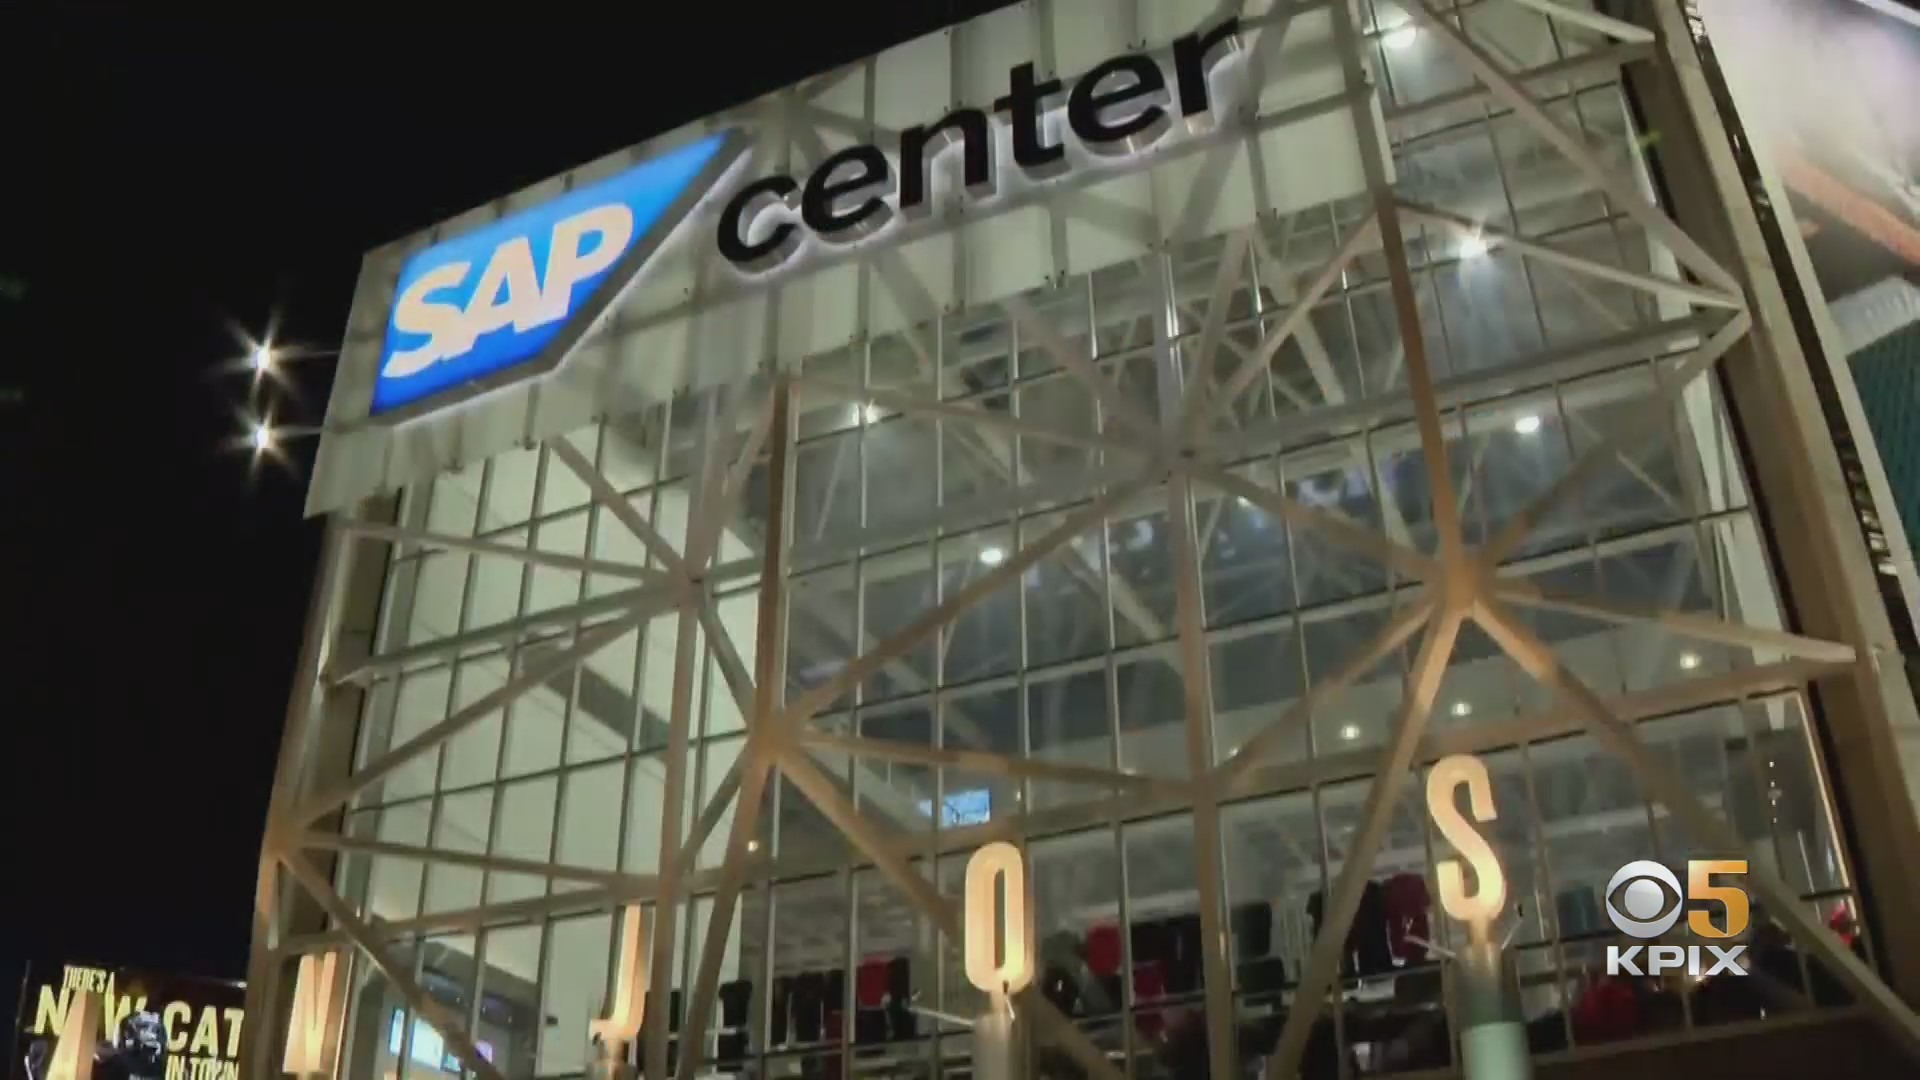 SAP Center Hosts 1st Concert After Lifting Of Santa Clara County Mask Mandate